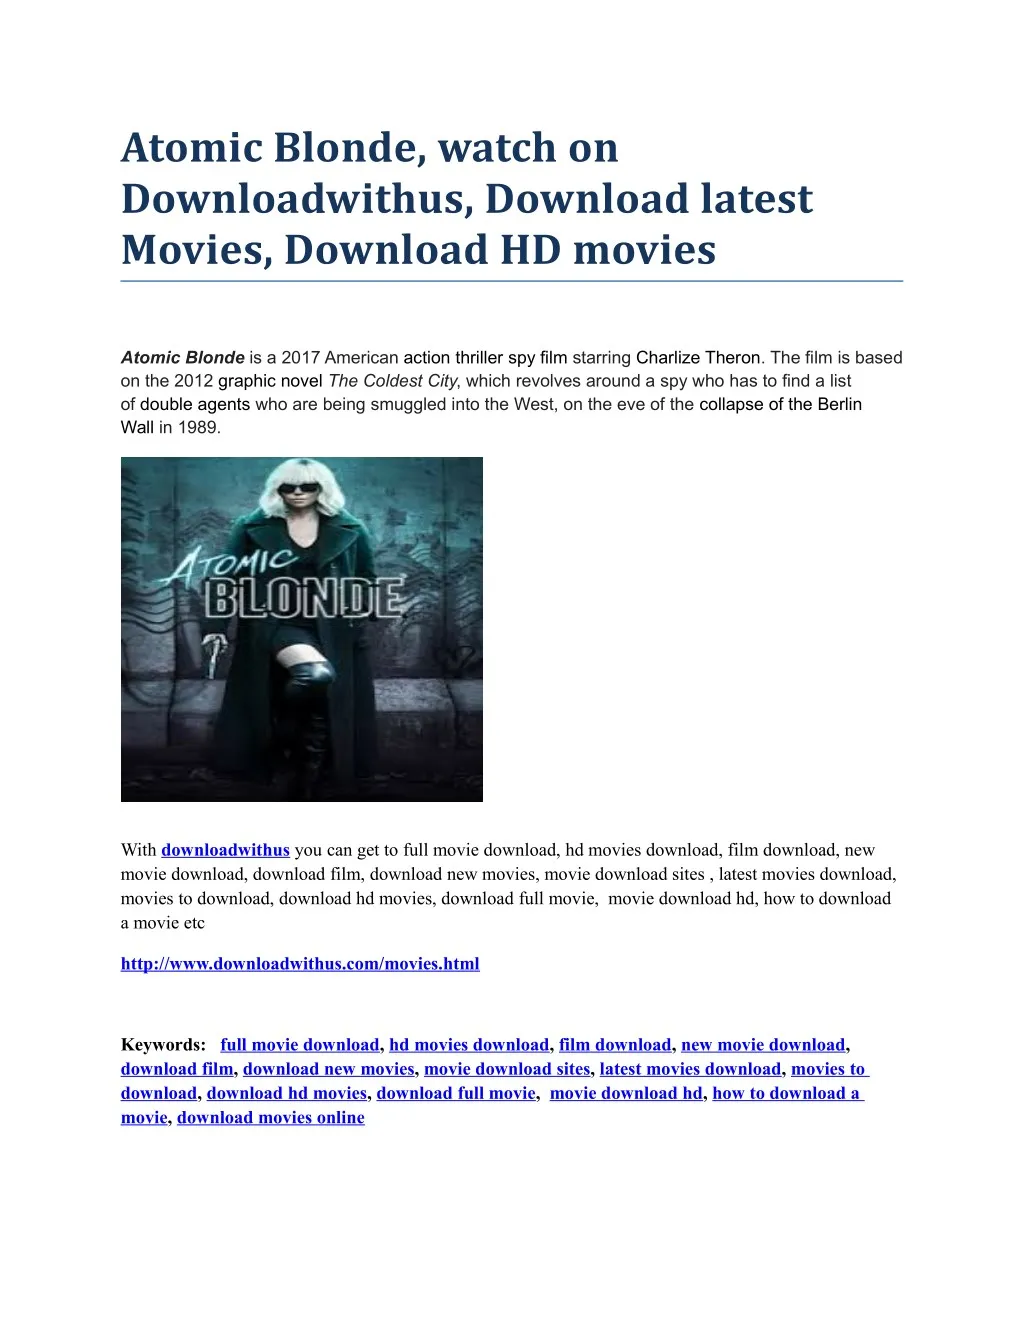 atomic blonde watch on downloadwithus download